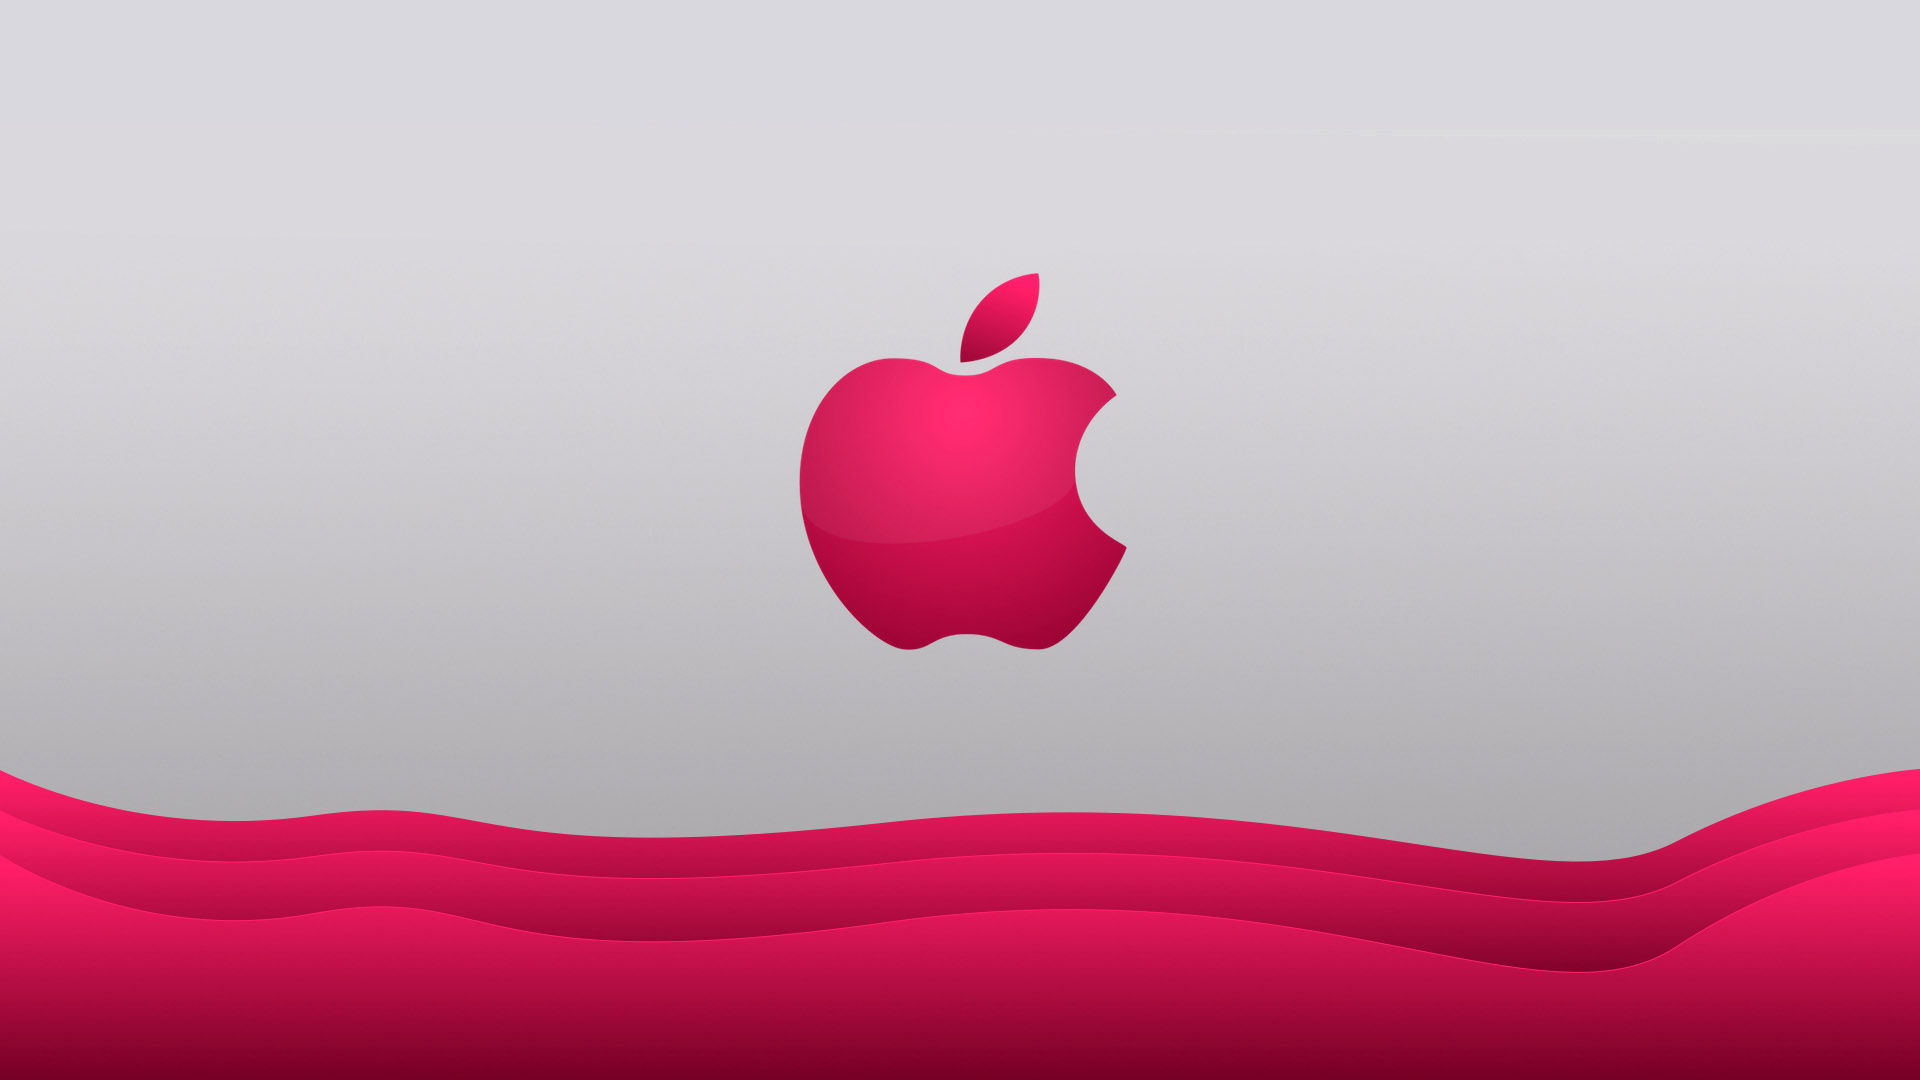 Wallpaper Mac Apple Desktop Change Pink Abstract Background